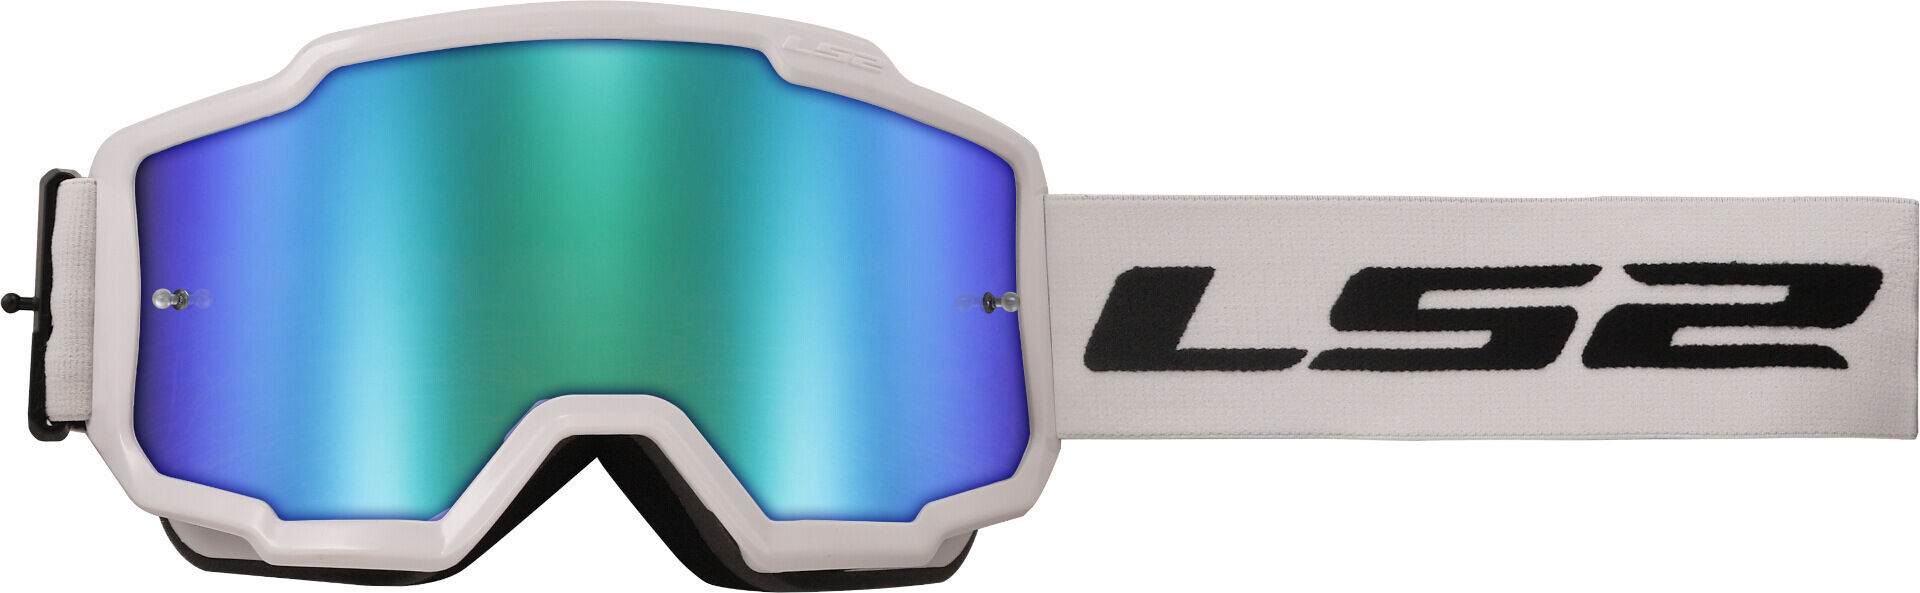 LS2 Charger Gafas de motocross - Blanco